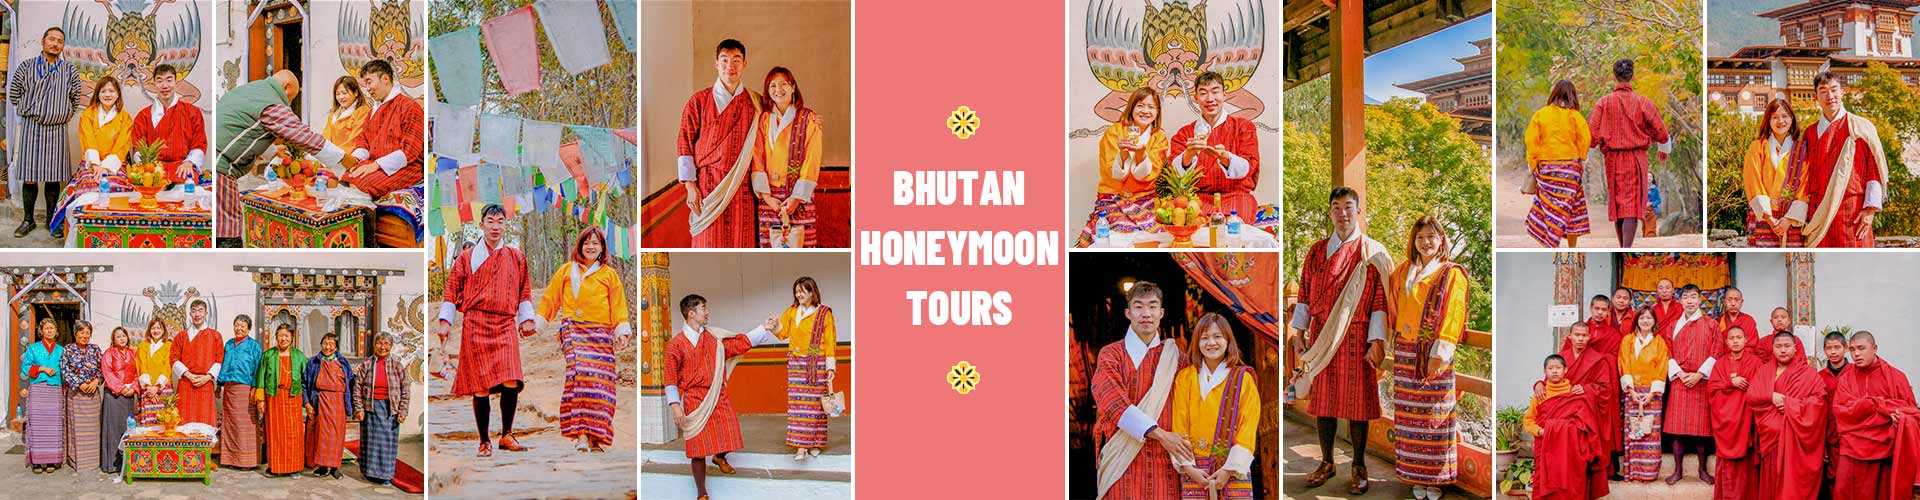 Bhutan Honeymoon Tours